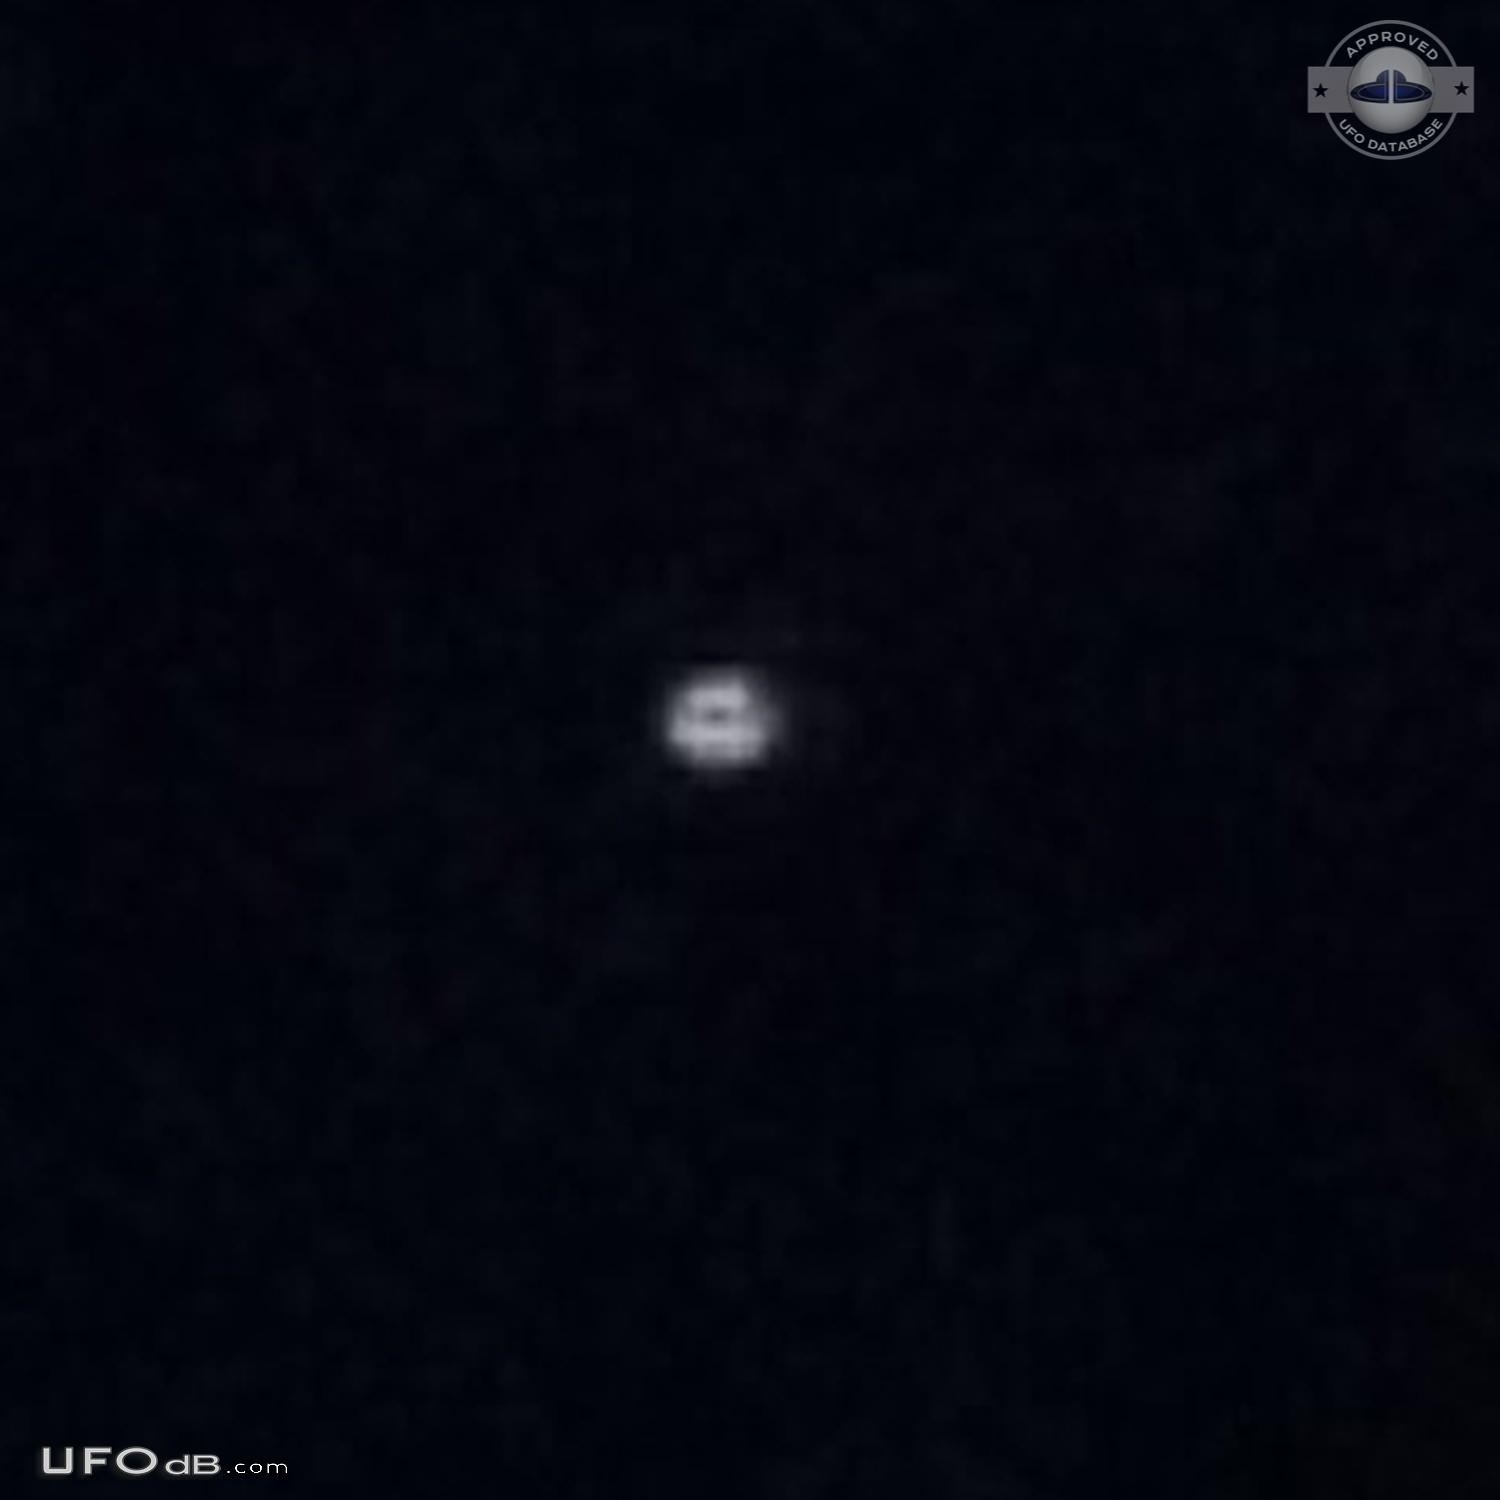 UFO seen every day over Diamond Lake Lodge Oregon USA 2017 UFO Picture #839-3